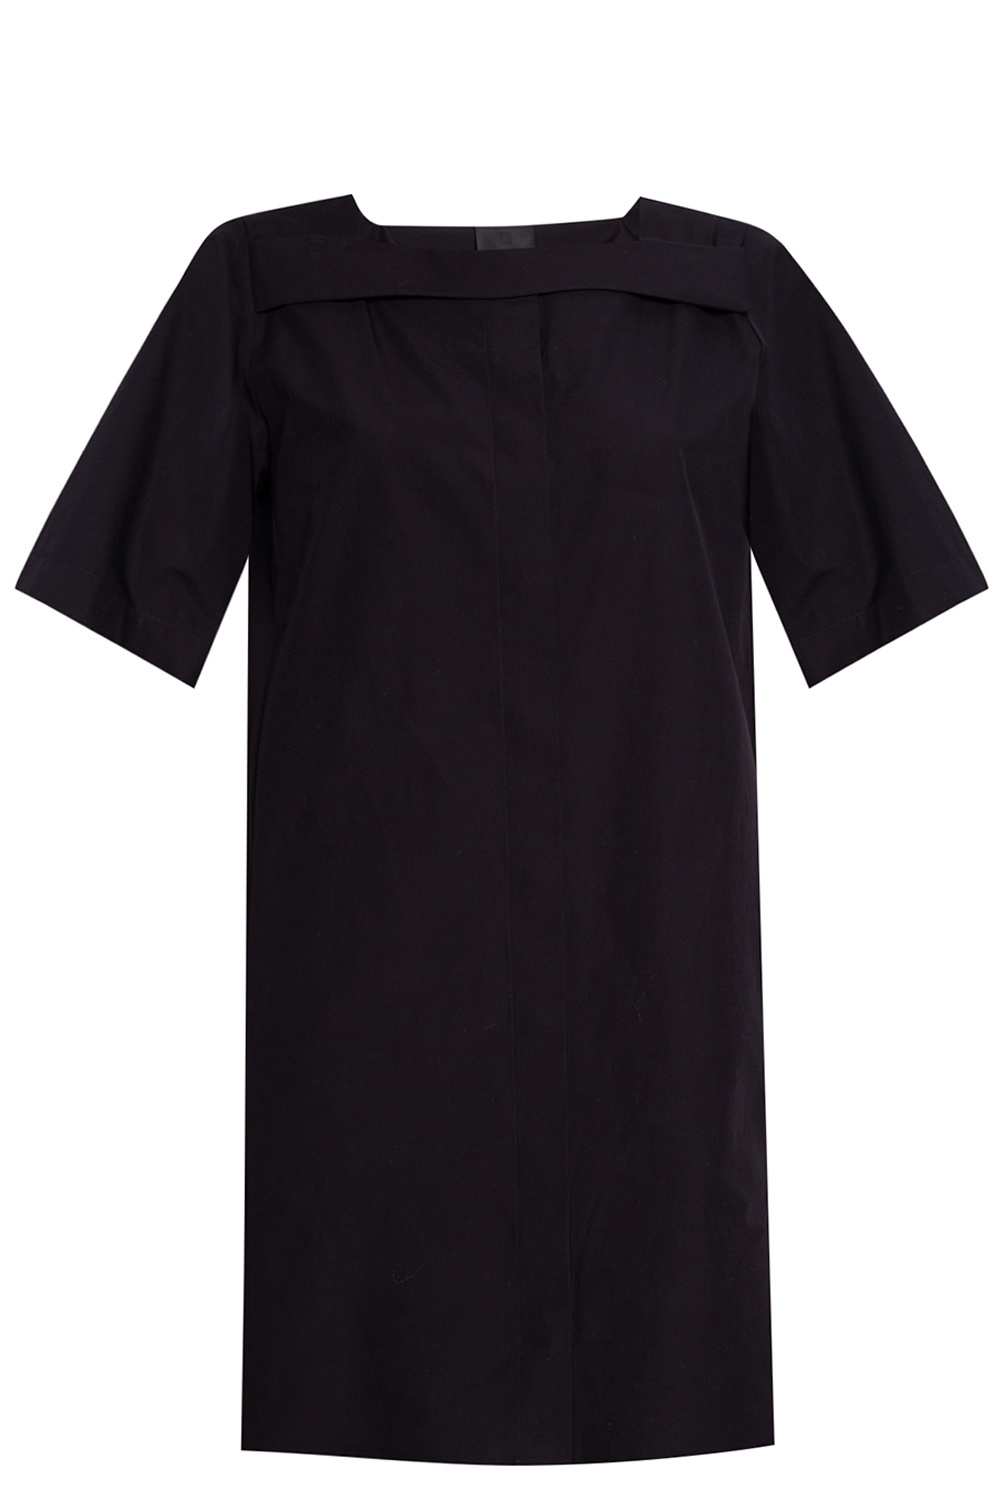 Givenchy Short-sleeved dress